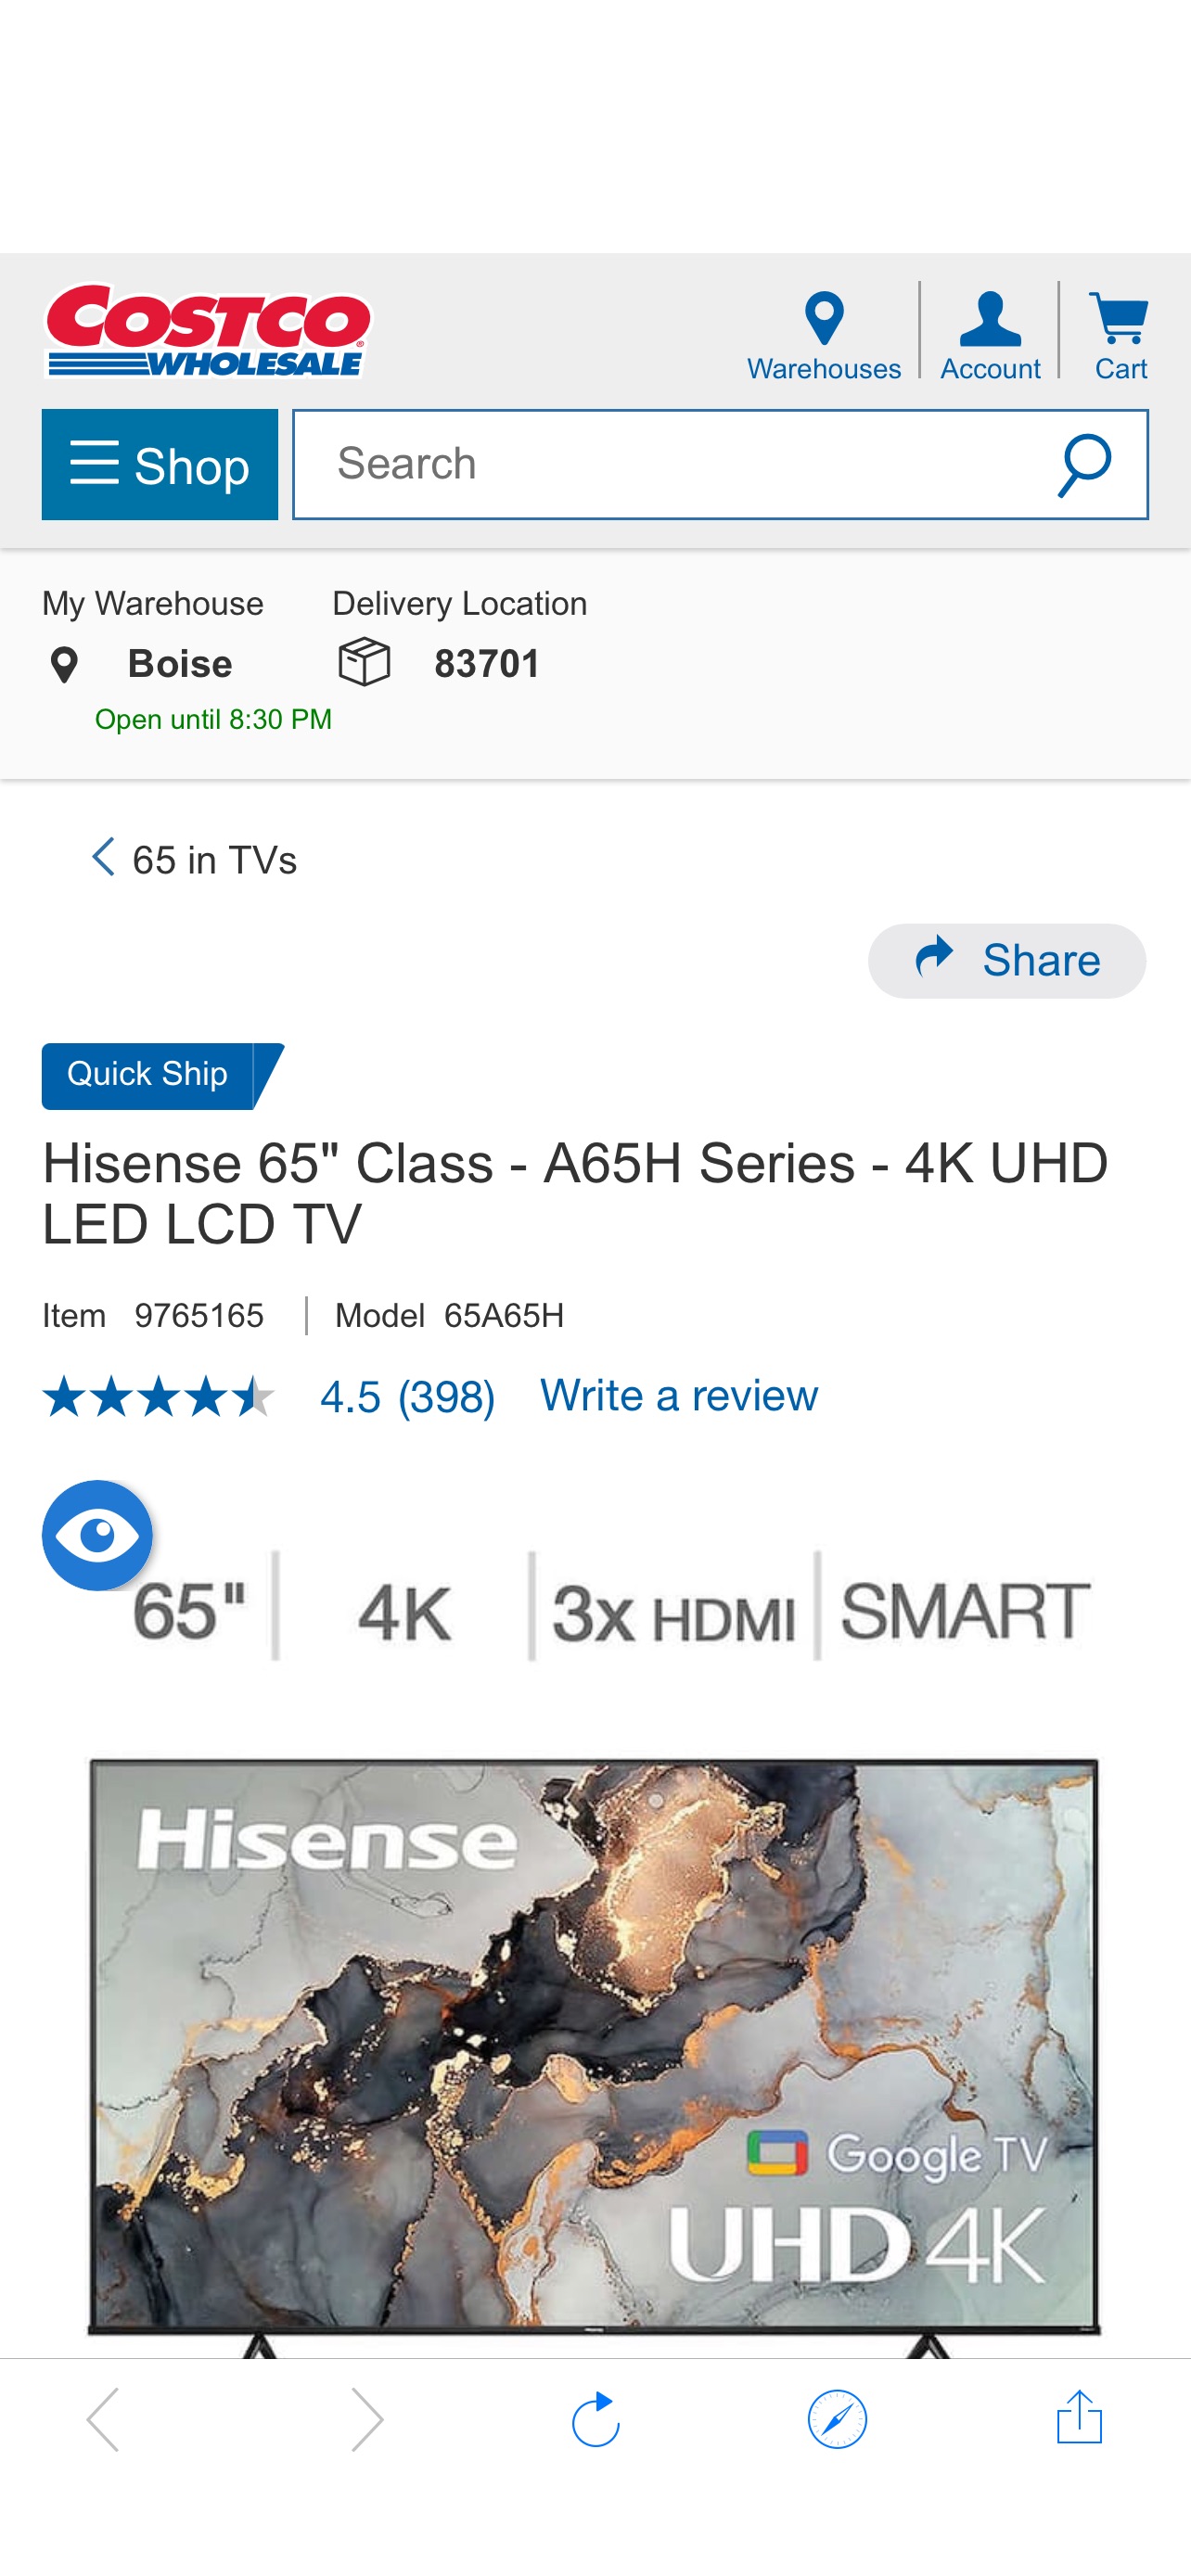 Hisense 65" Class - A65H Series - 4K UHD LED LCD TV | Costco